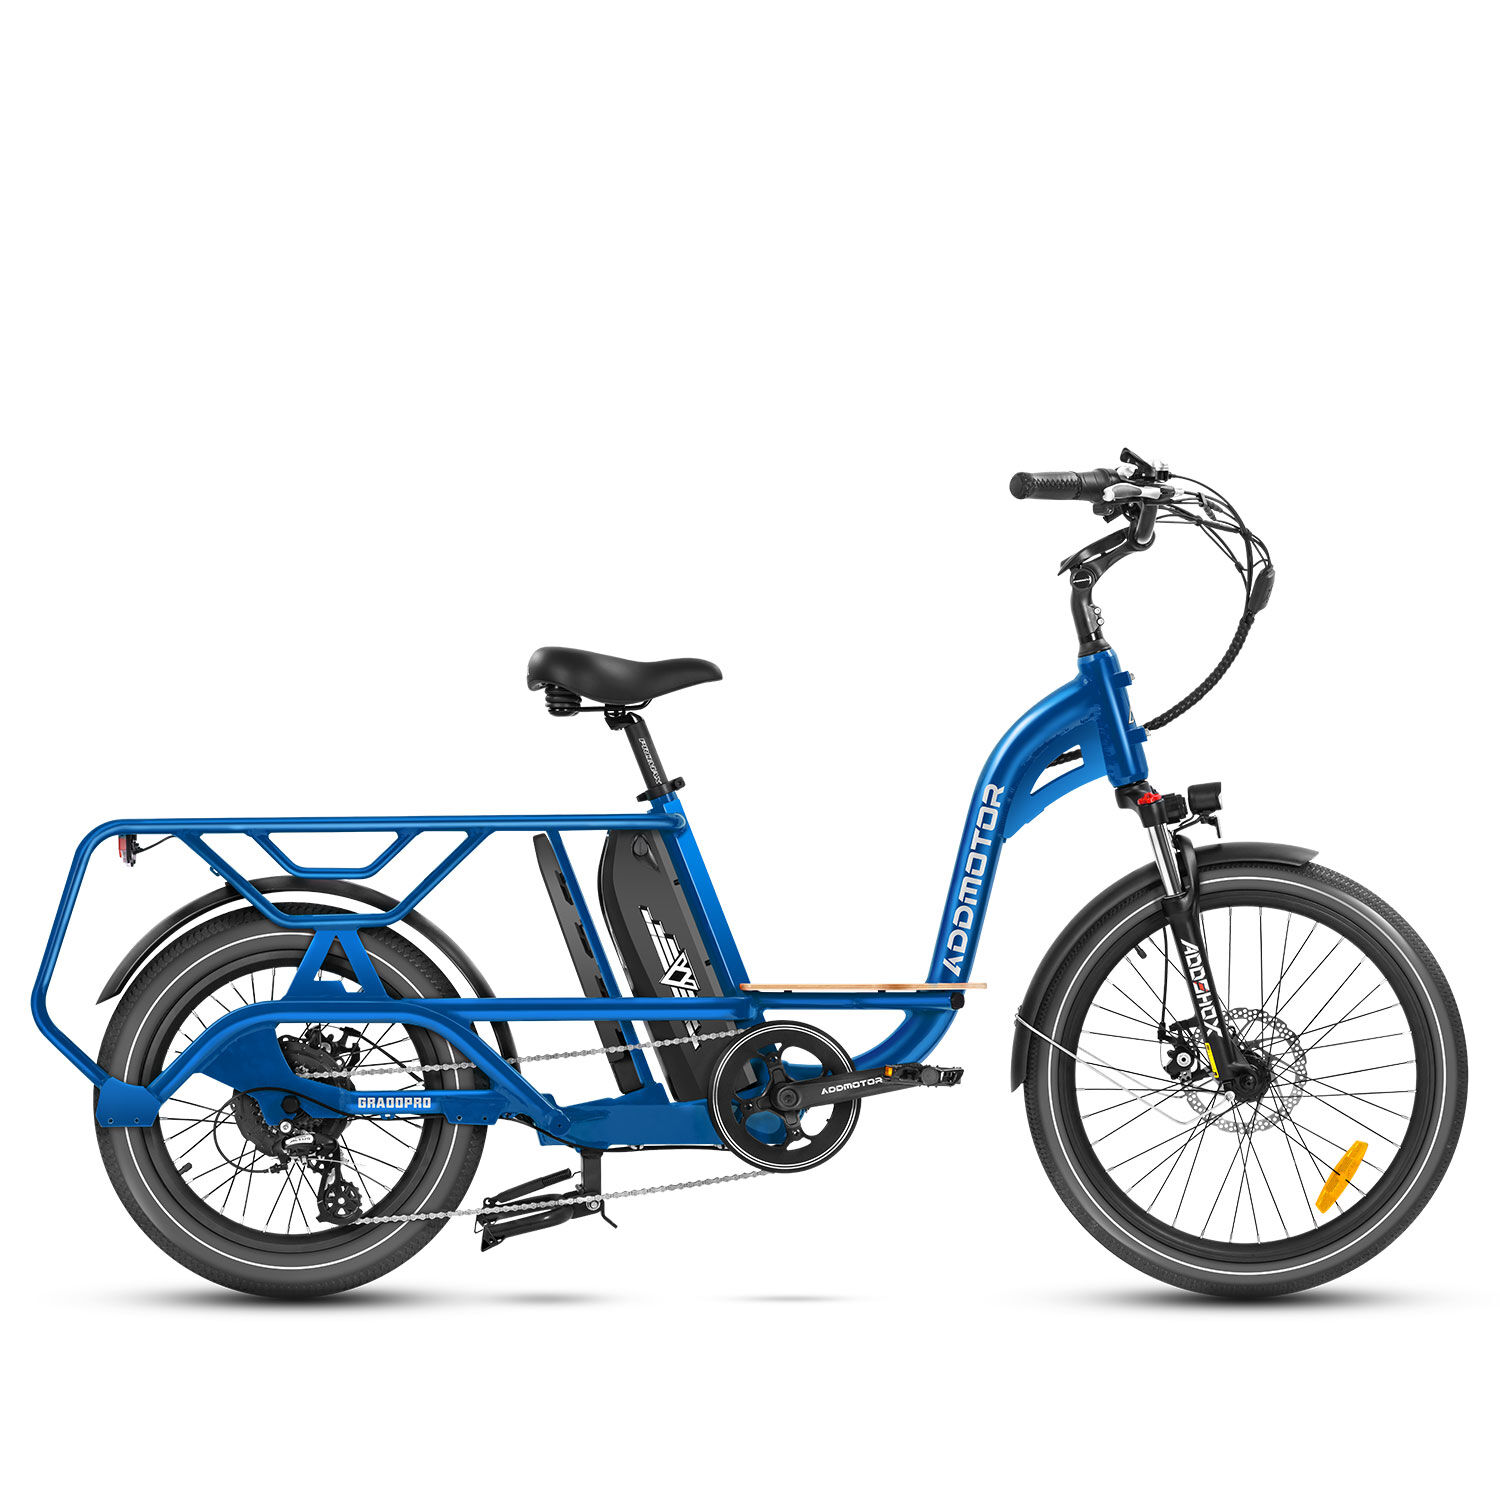 Addmotor Graoopro Electric Bike   Best Dual Battery Cargo Electric Bicycle   Adults 750W Rear Motor Ebikes   Neptune Blue + Dual-Battery